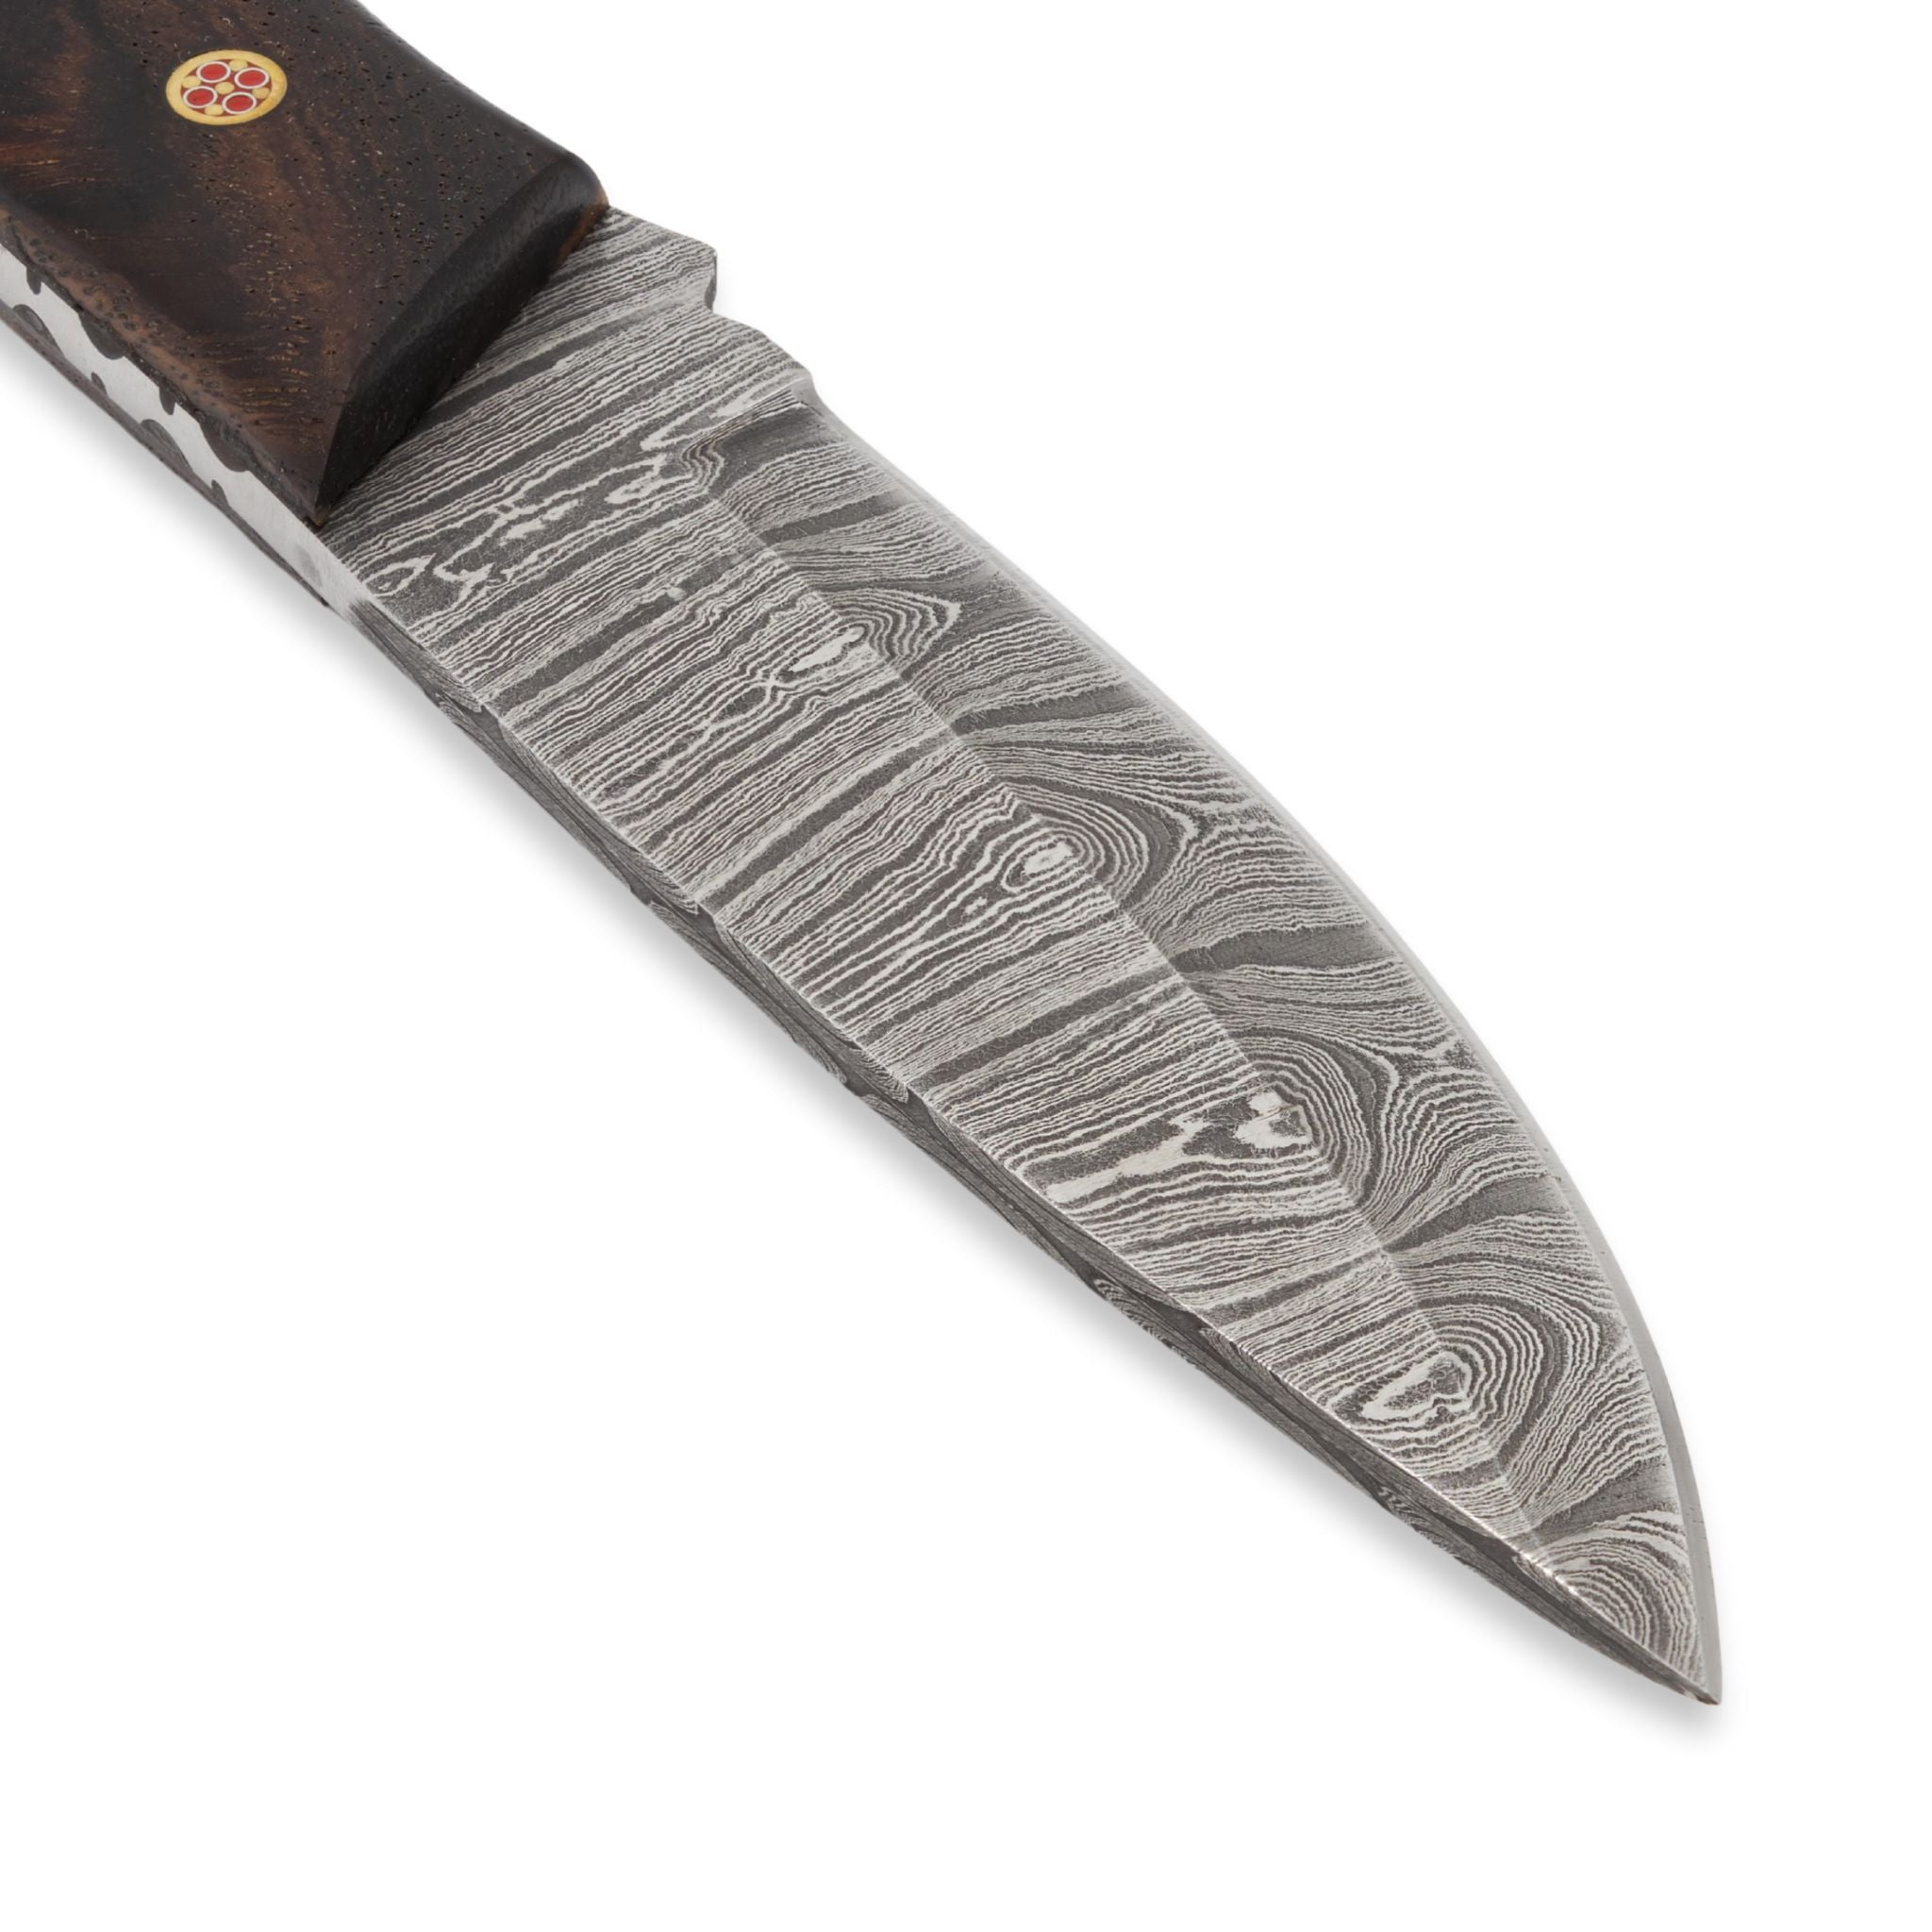 Outback Nomad II, Damascus Steel, Handmade Hunting Knife